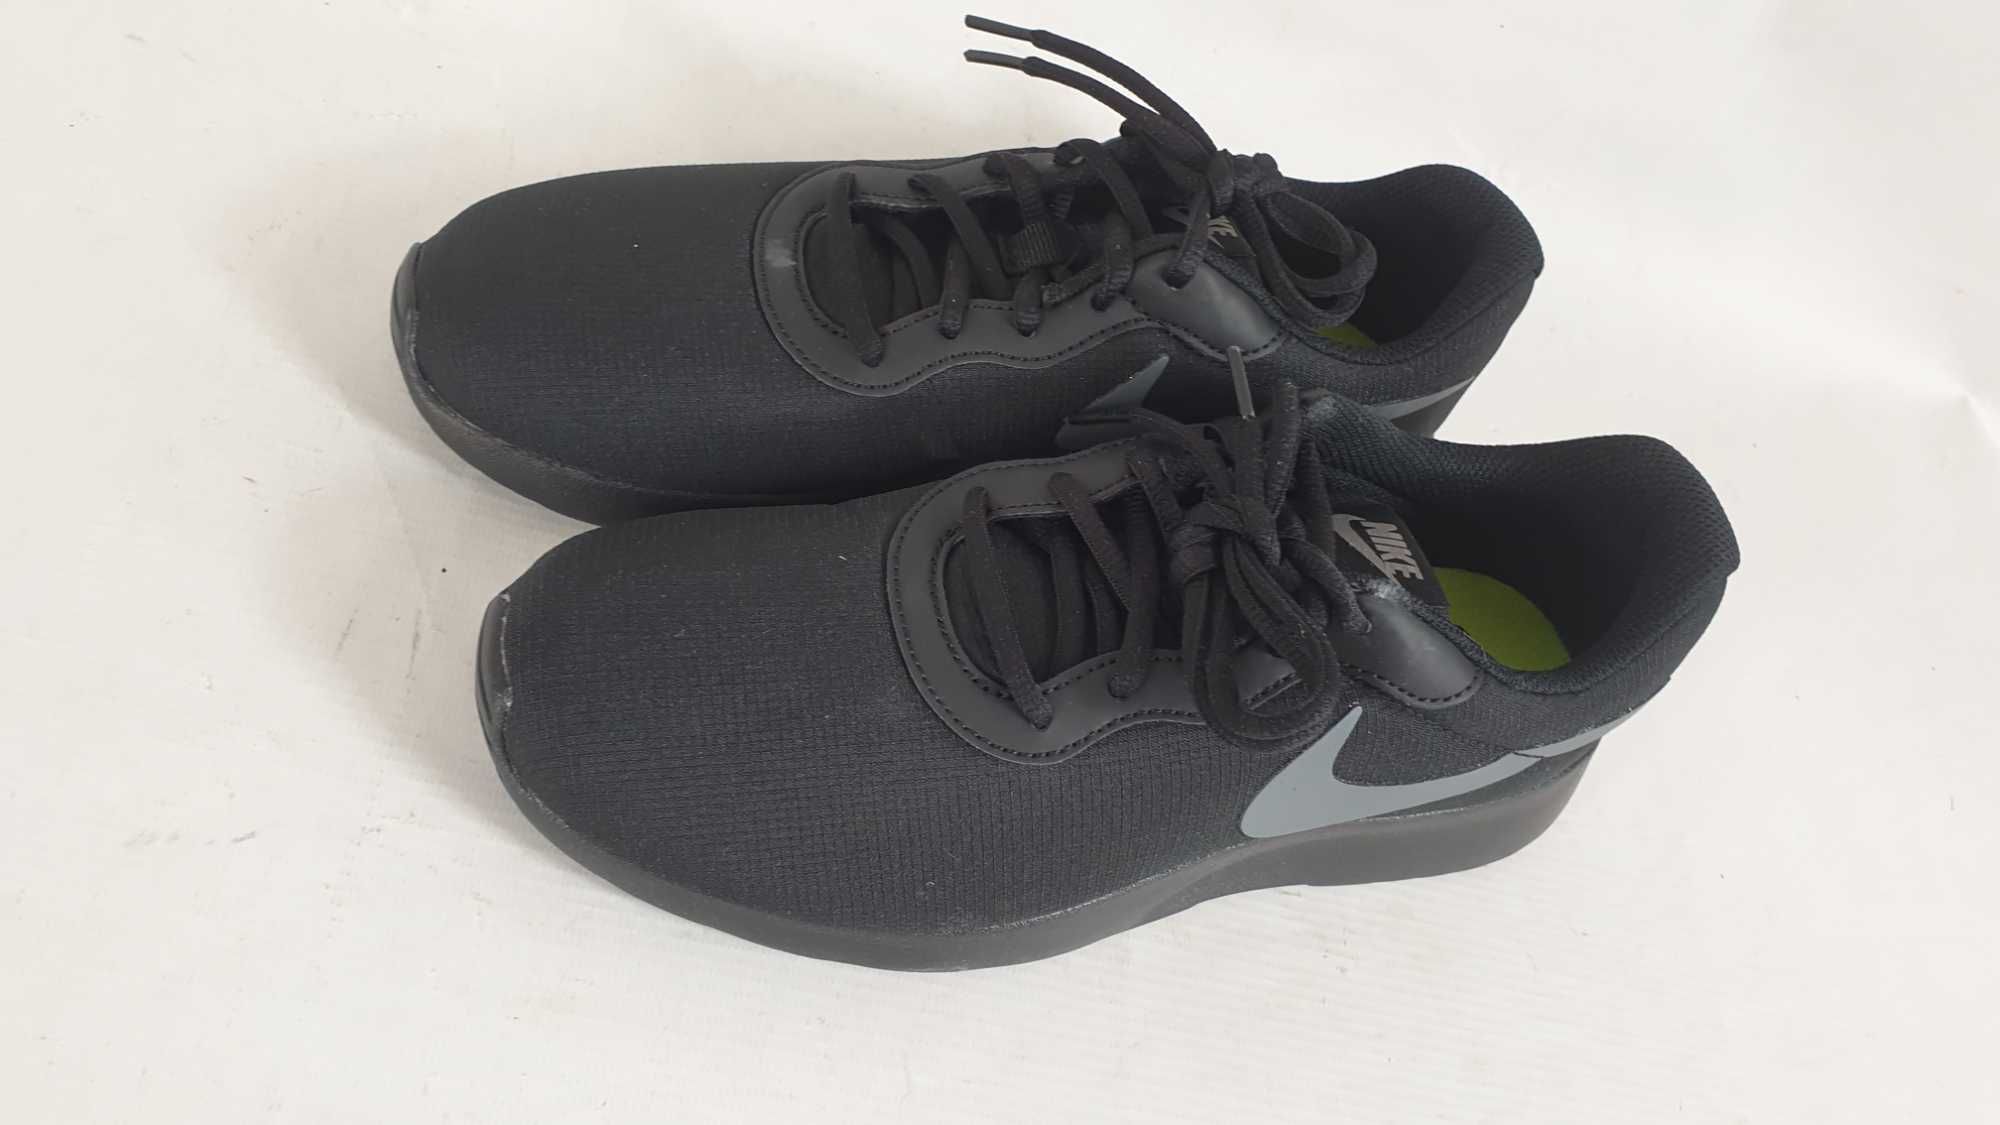 Nike buty  sportowe Nike Tanjun Refine rozmiar 39